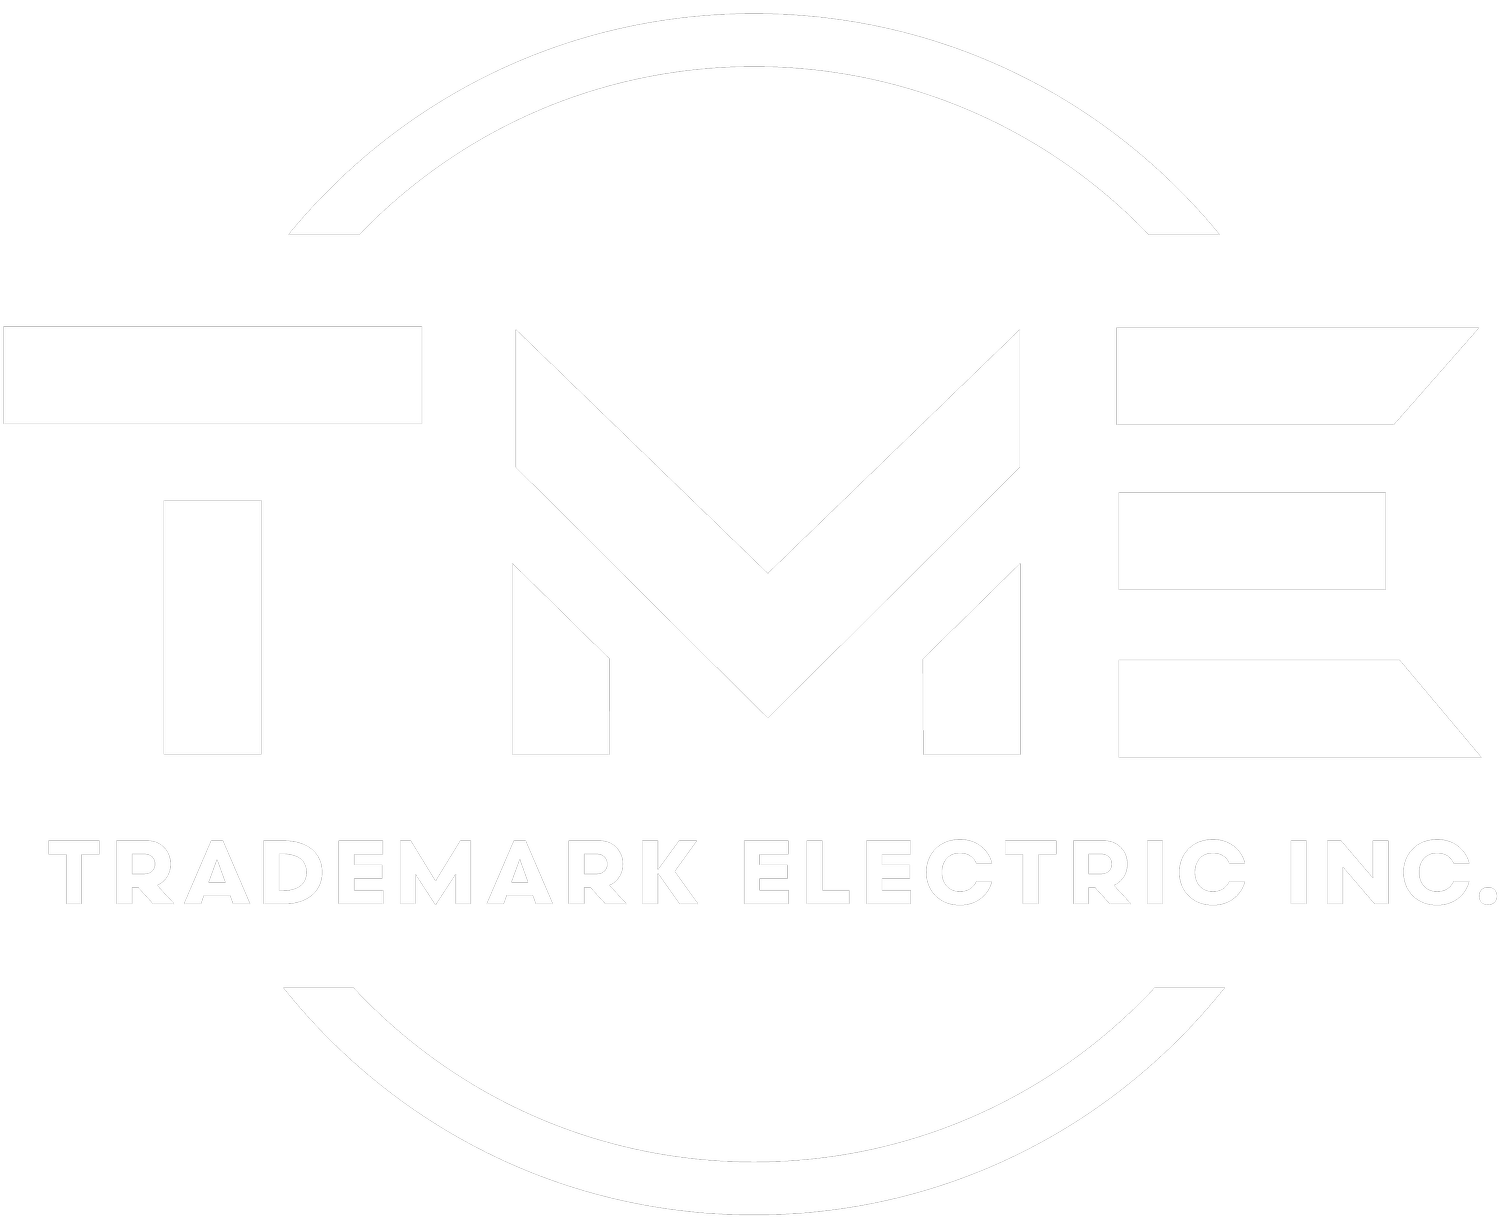 TradeMark Electric Inc.